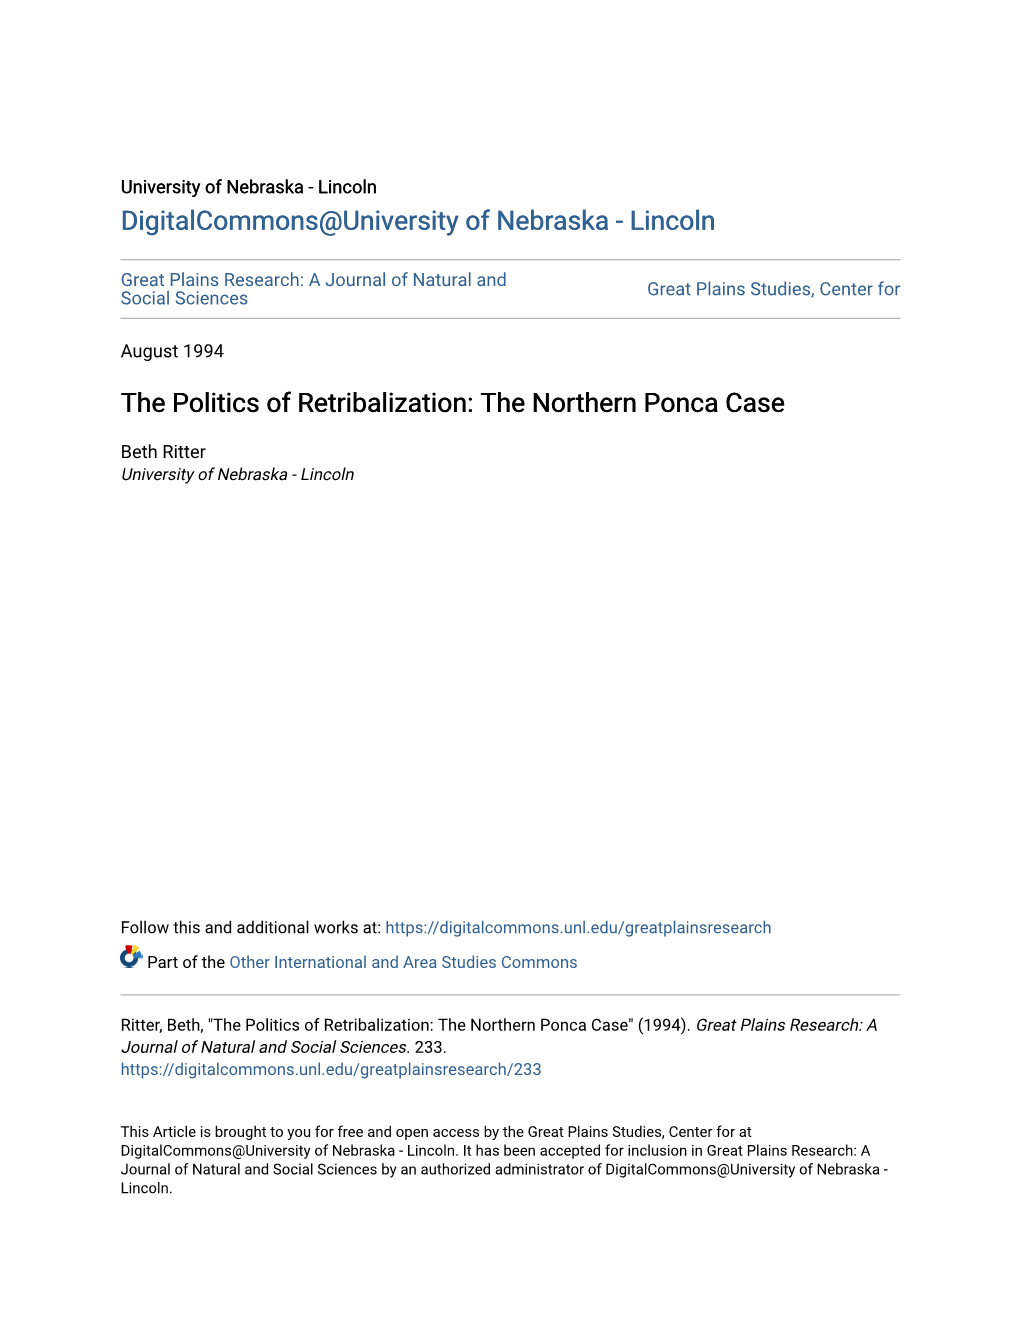 The Politics of Retribalization: the Northern Ponca Case